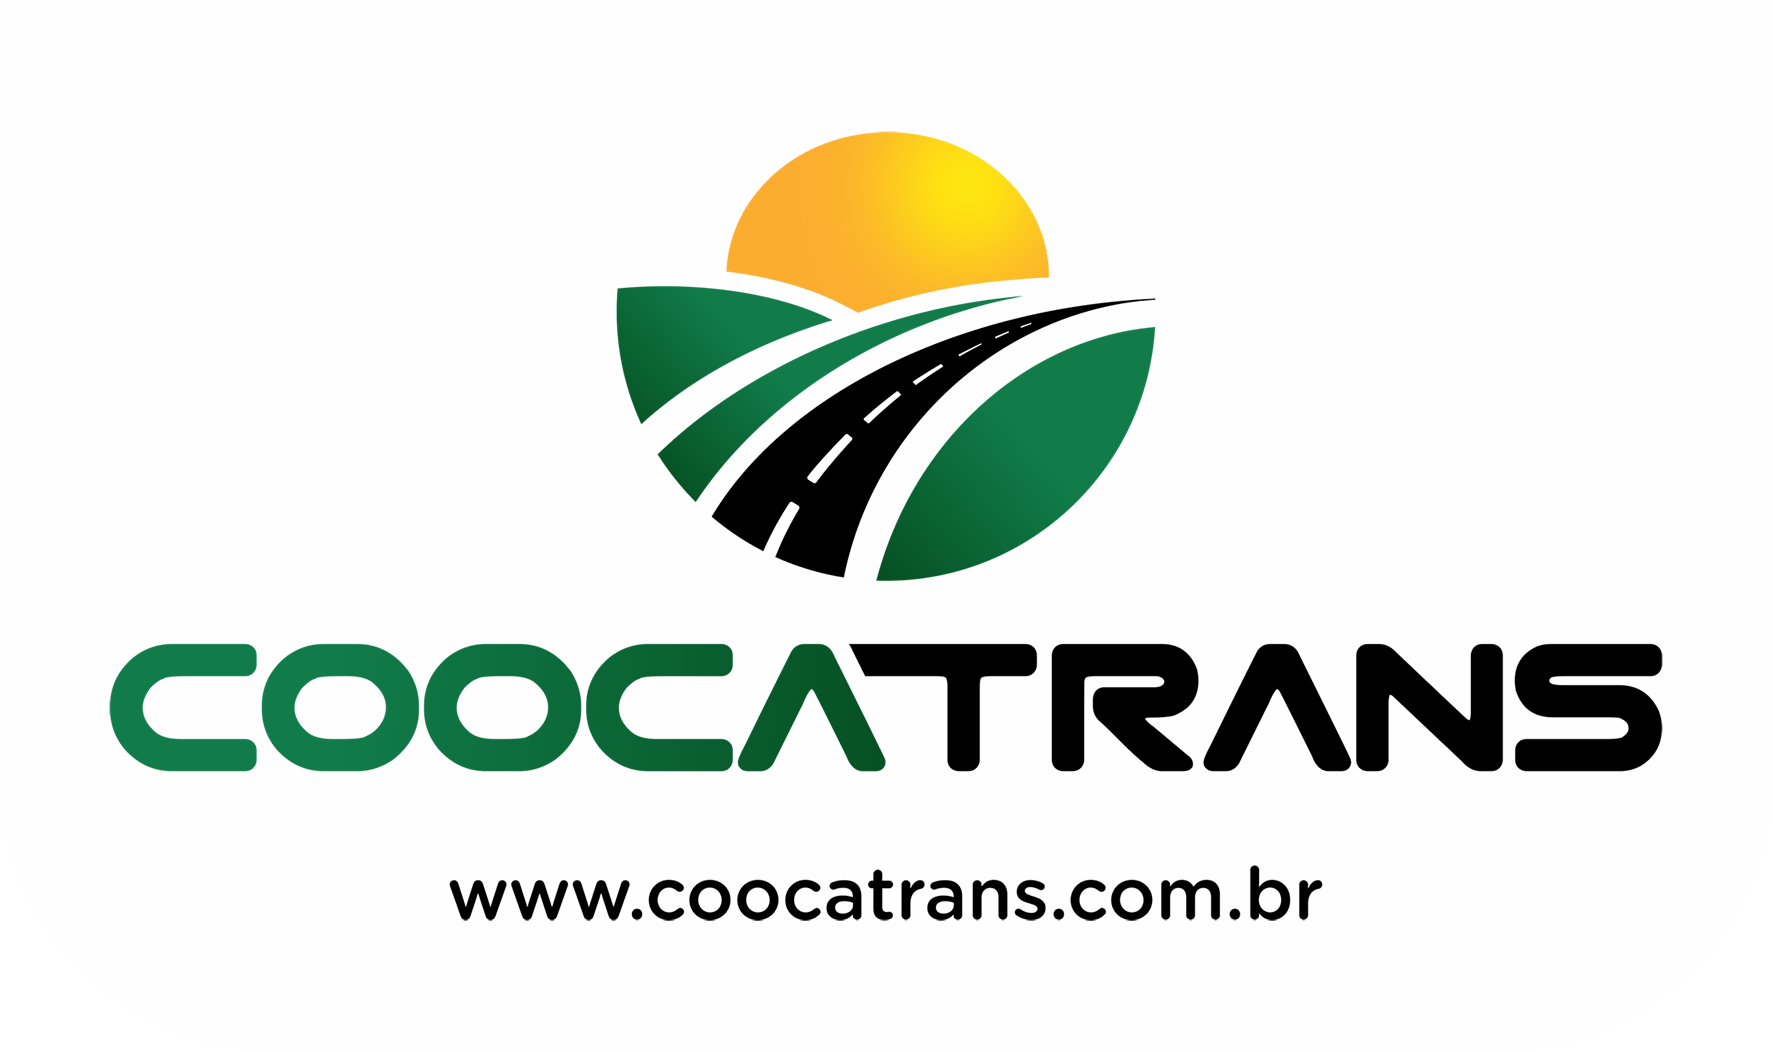 Coocatrans - Cooperativa Catarinense de Cargas